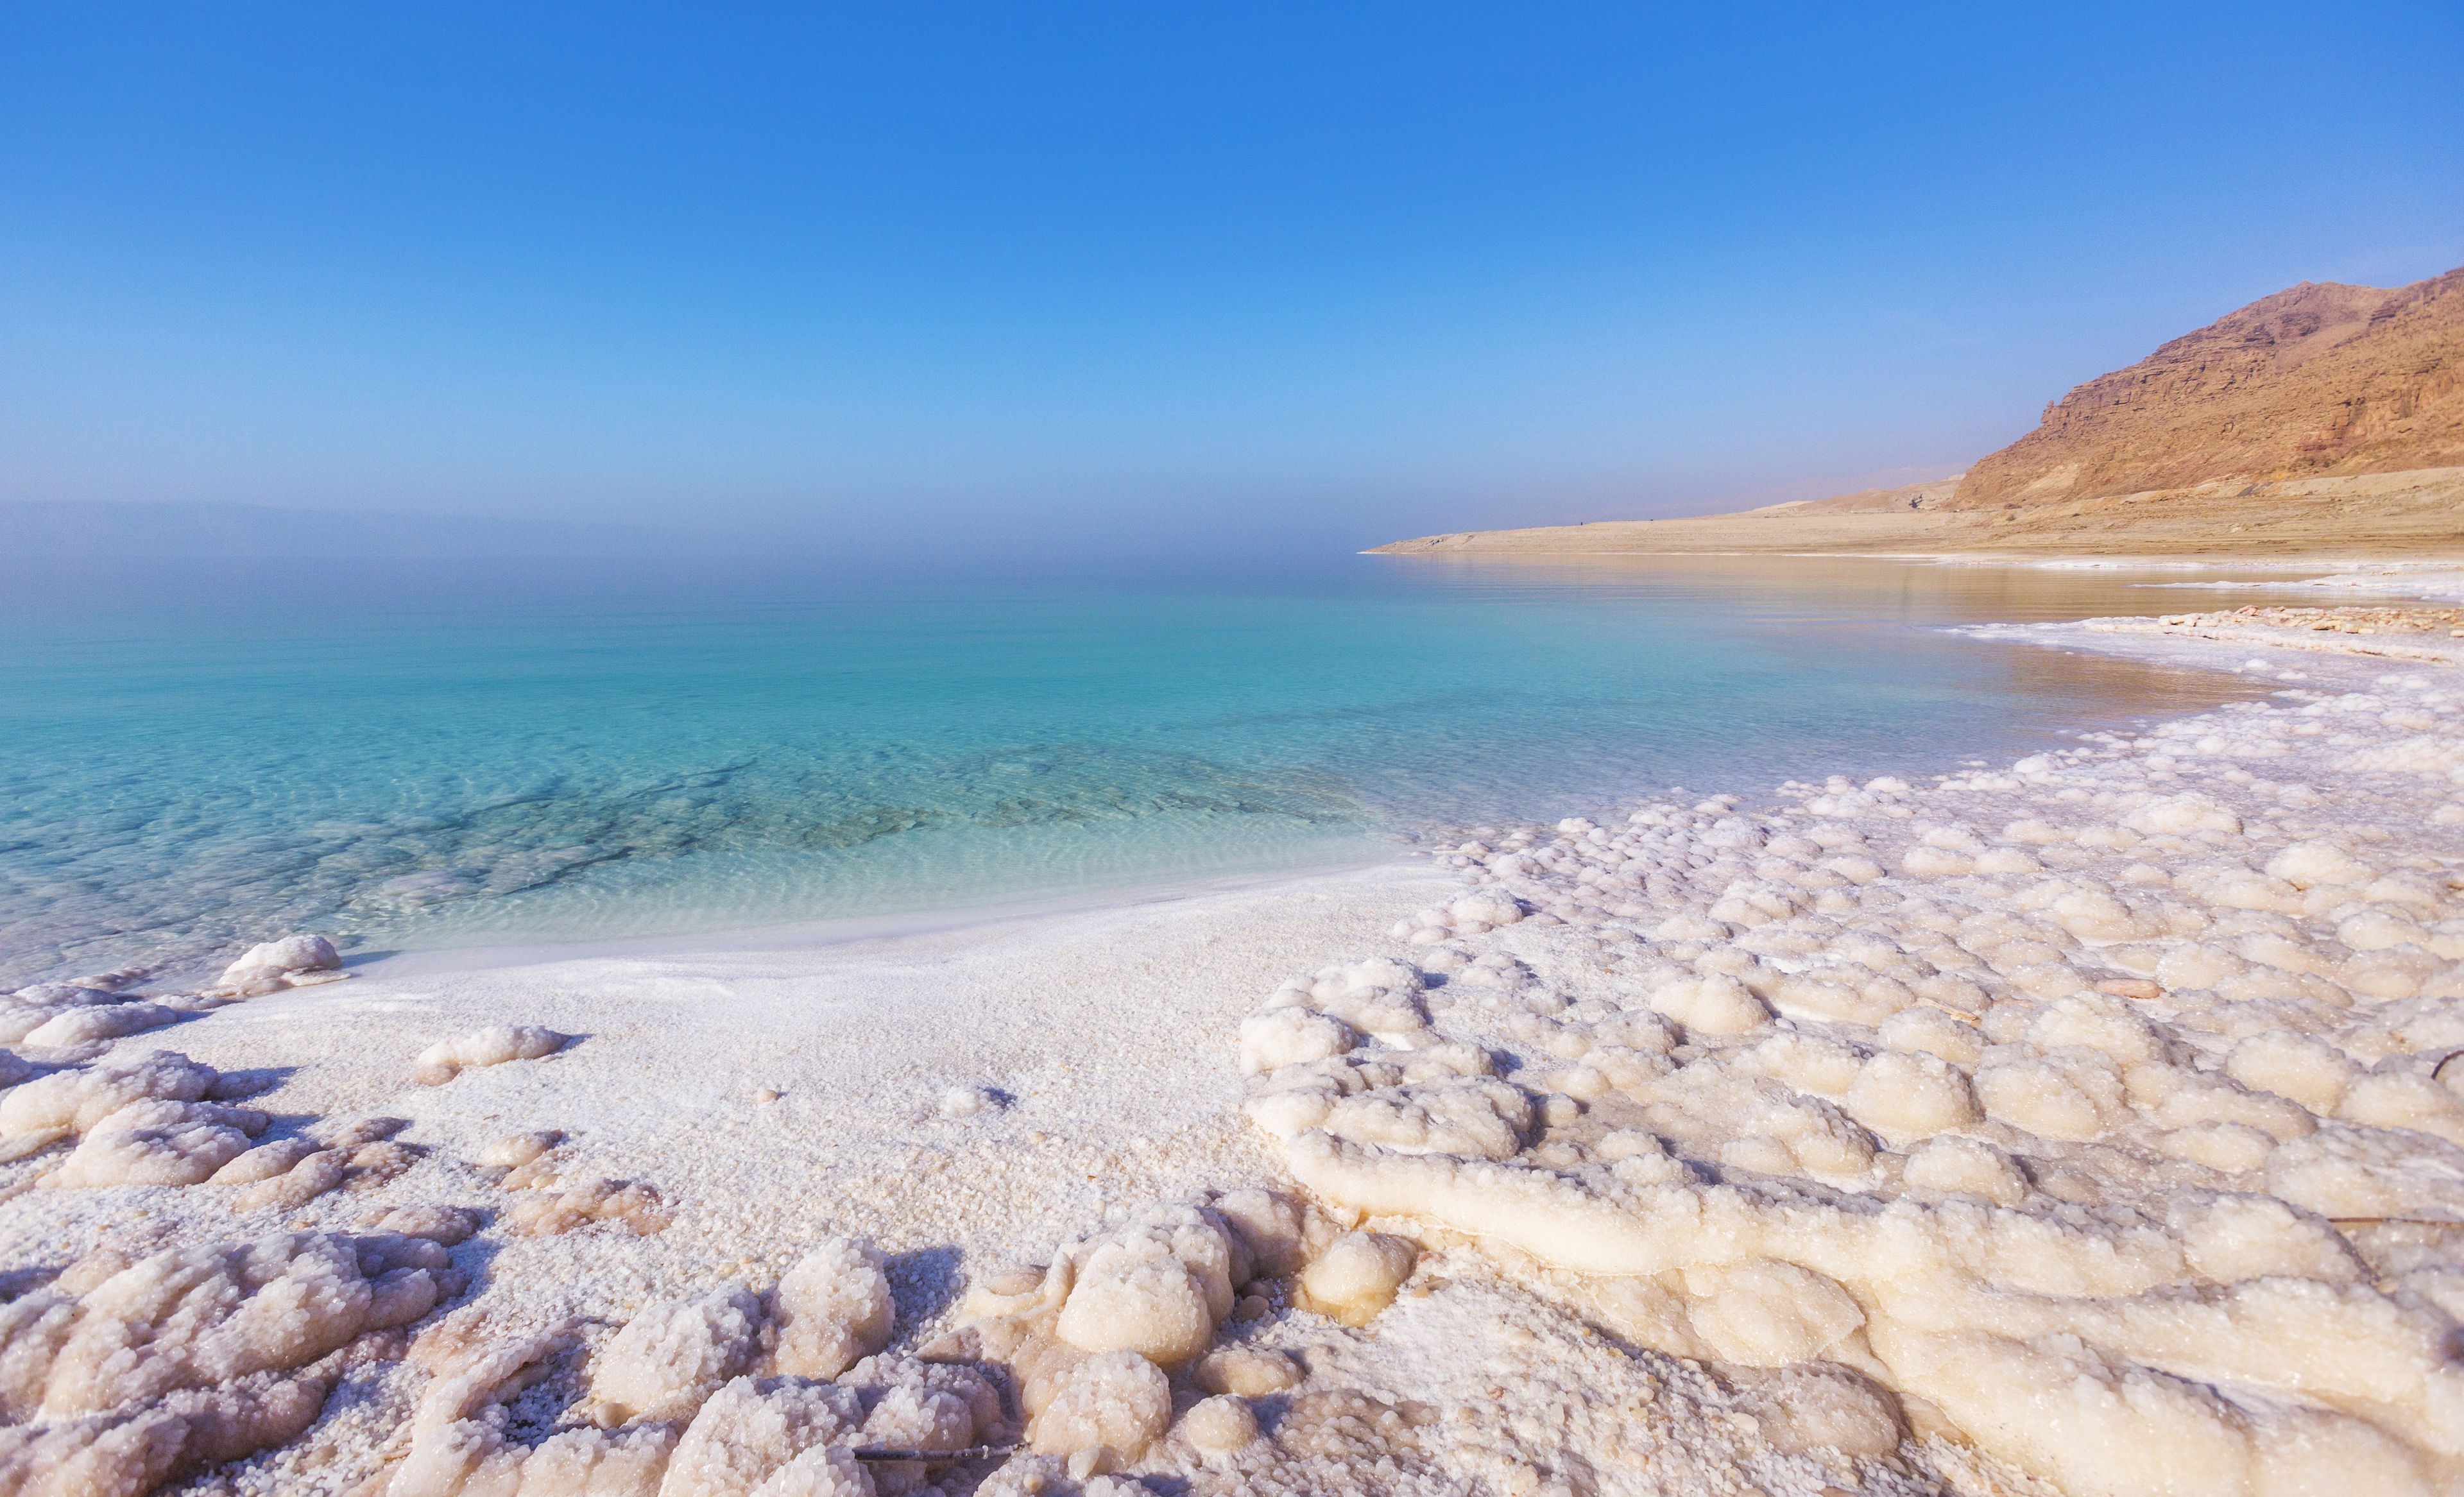 Dead Sea salt beach